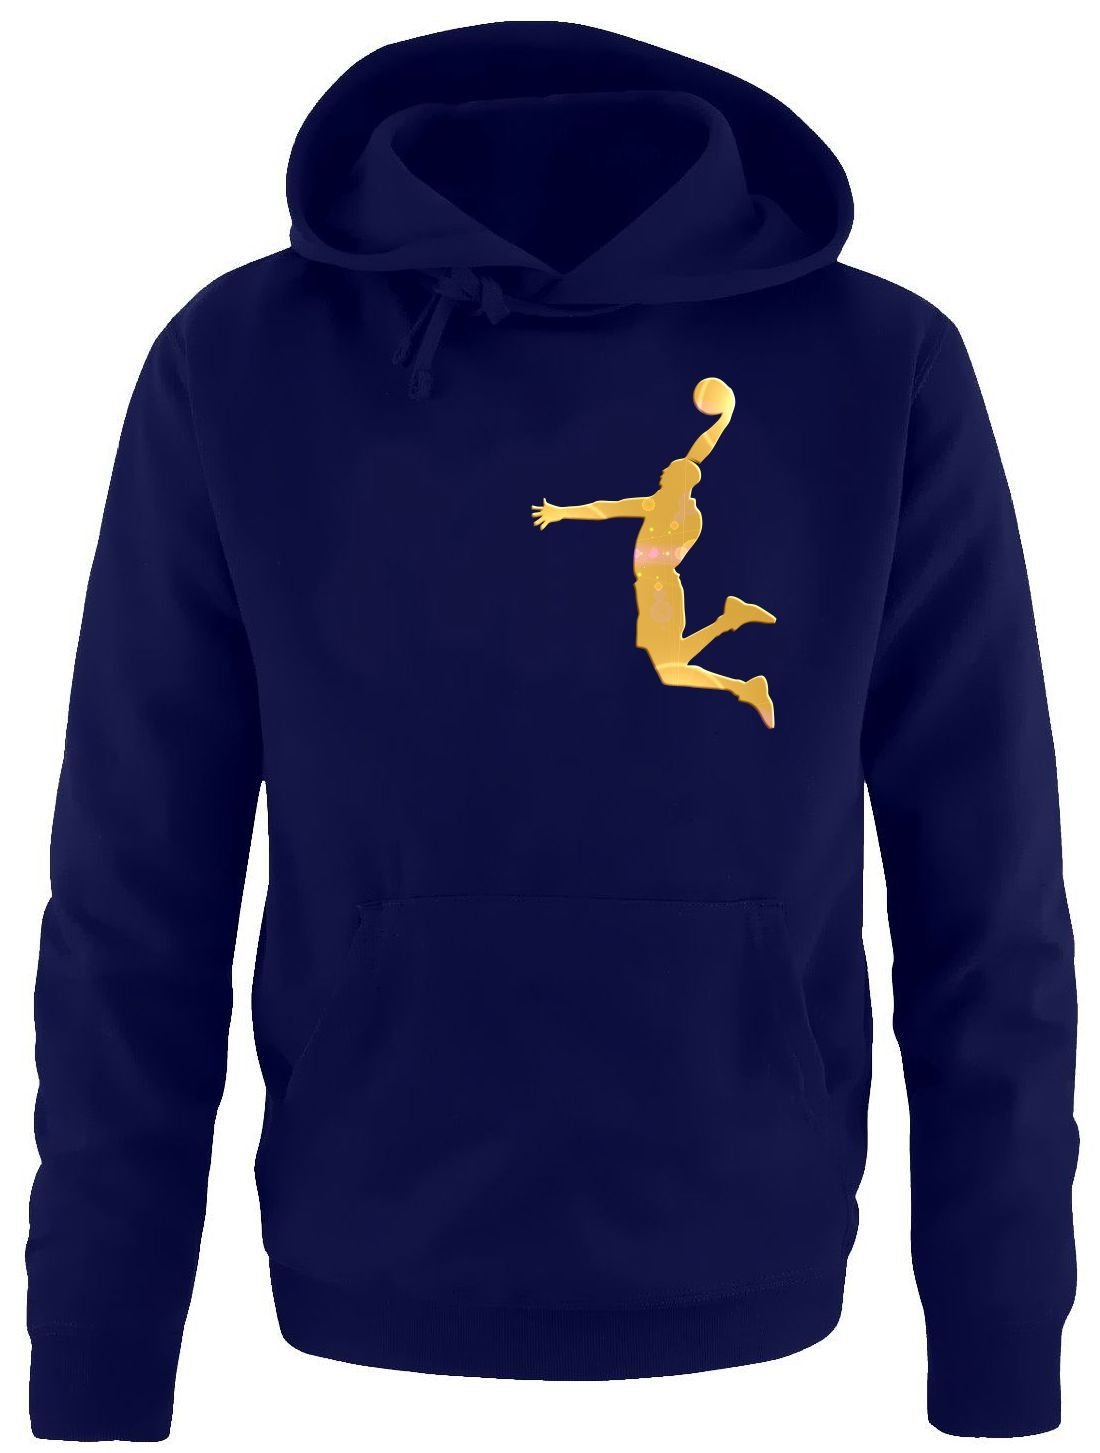 Coole-Fun-T-Shirts Dunk Basketball Slam Dunkin Kinder Sweatshirt mit Kapuze Hoodie Navy-Gold, Gr.152cm